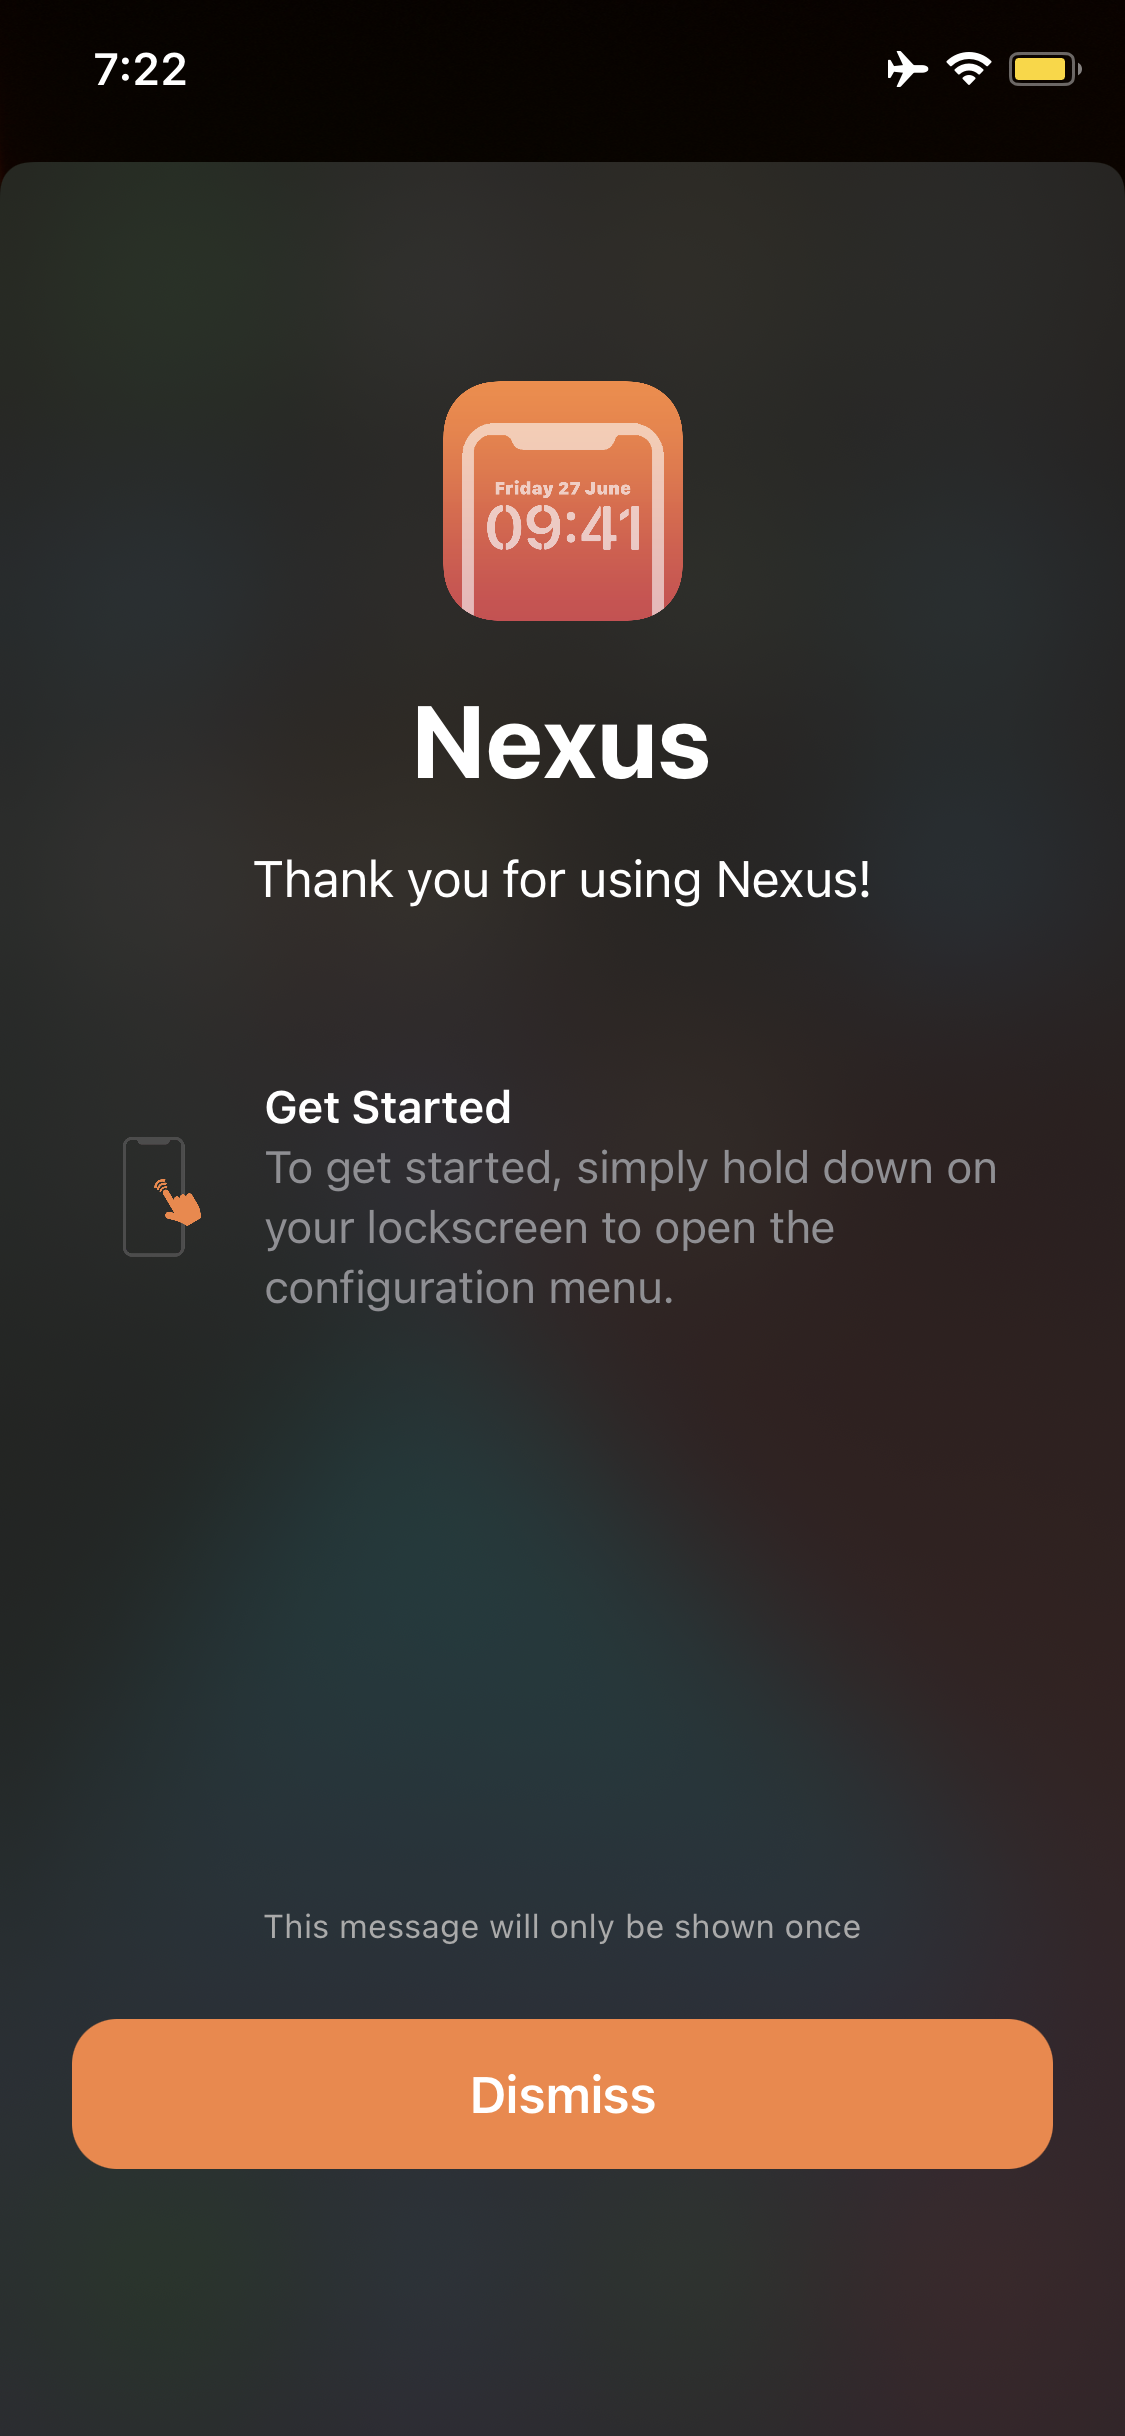 Nexus quick start.